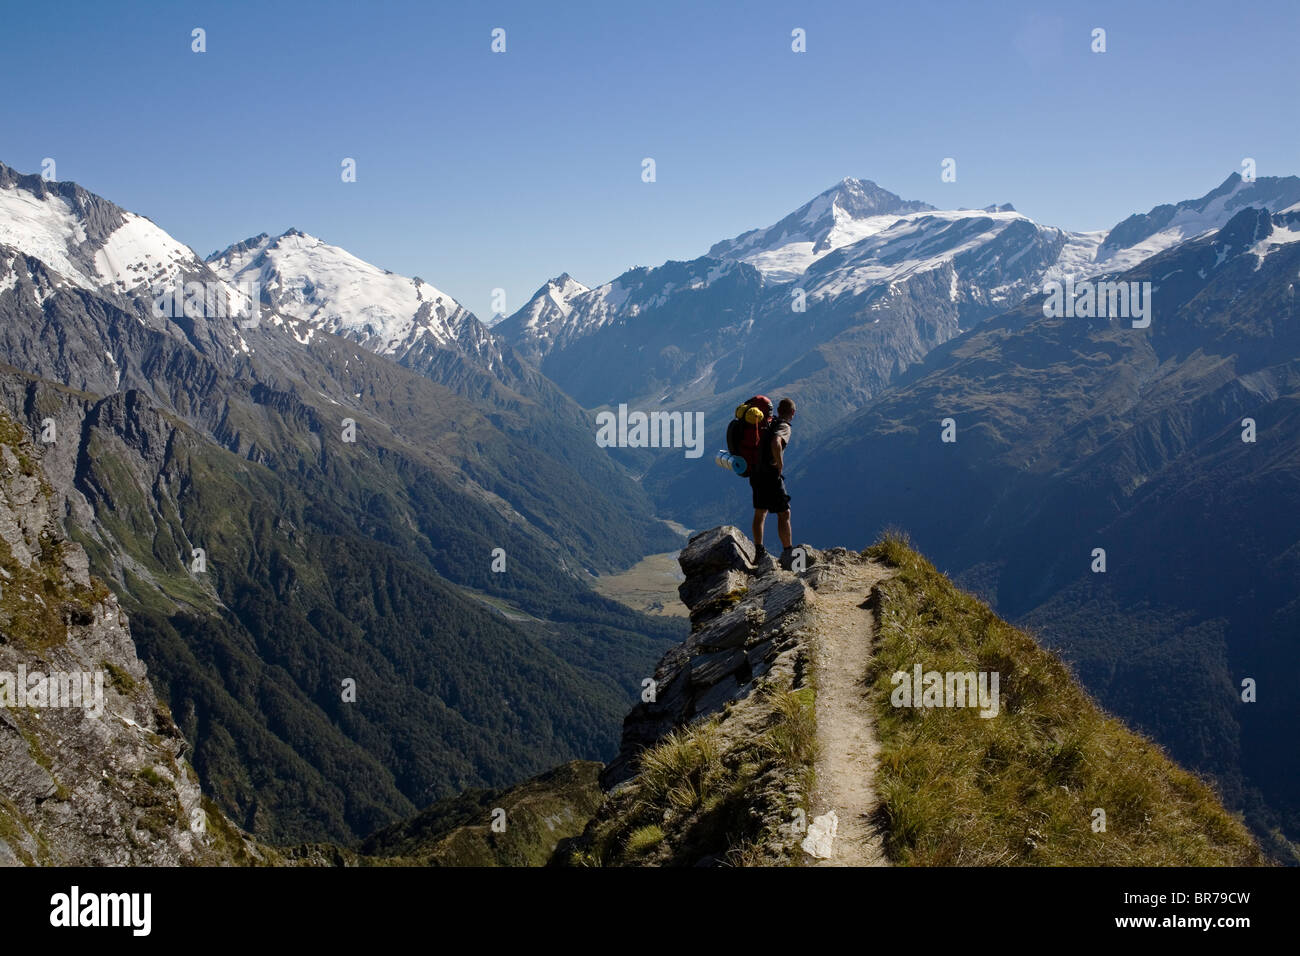 A hiker looking over the Matukituki Valley towards Mount Aspiring in the Mount Aspiring National Park. Stock Photo